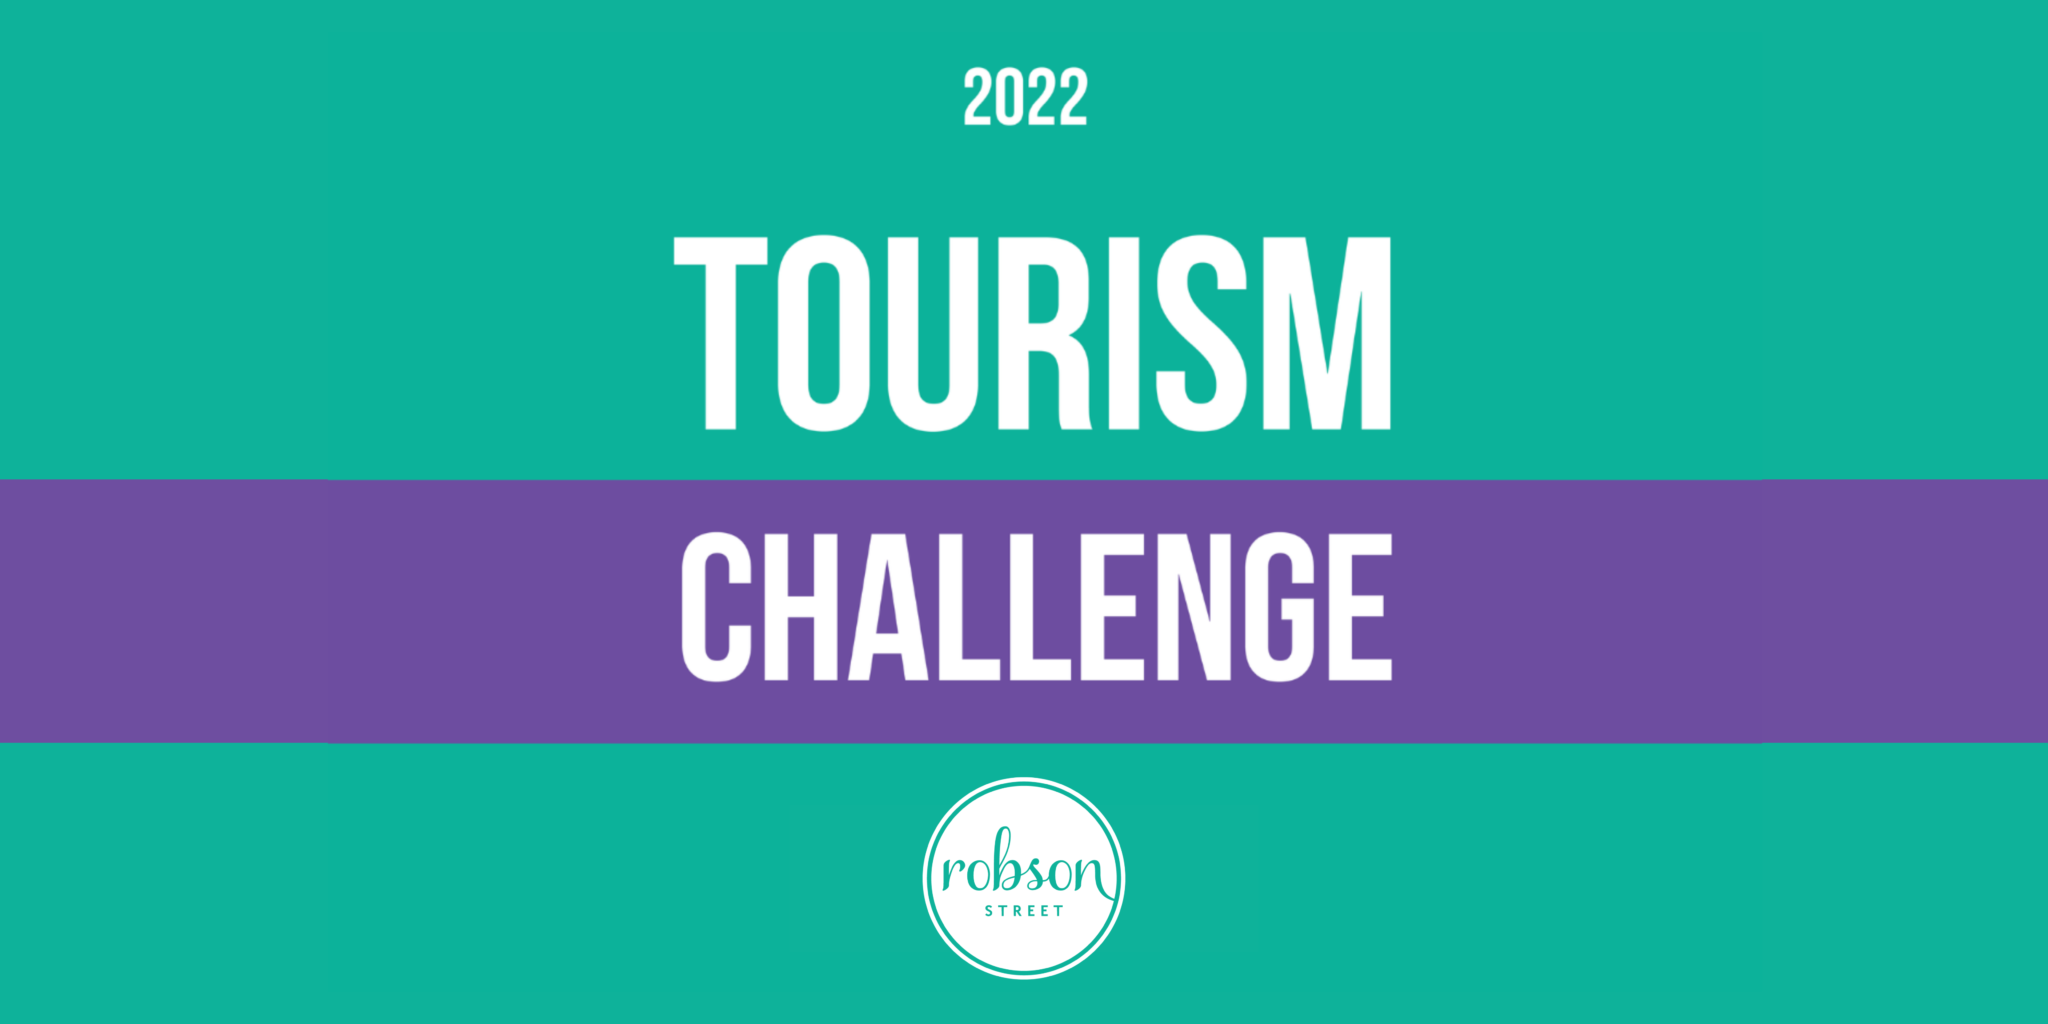 tourism challenge vancouver 2022